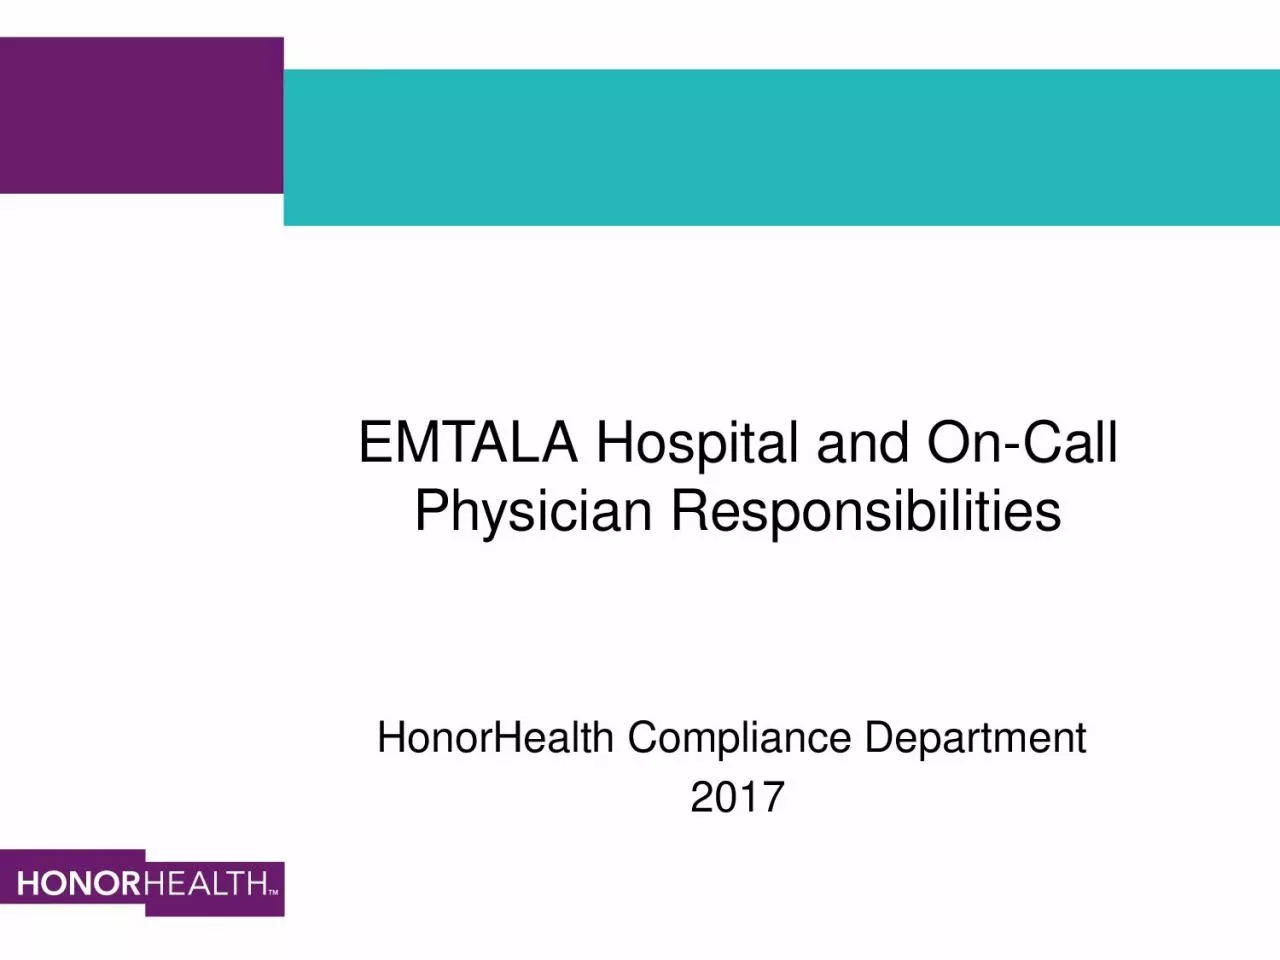 EMTALA Hospital and On-Call Physician